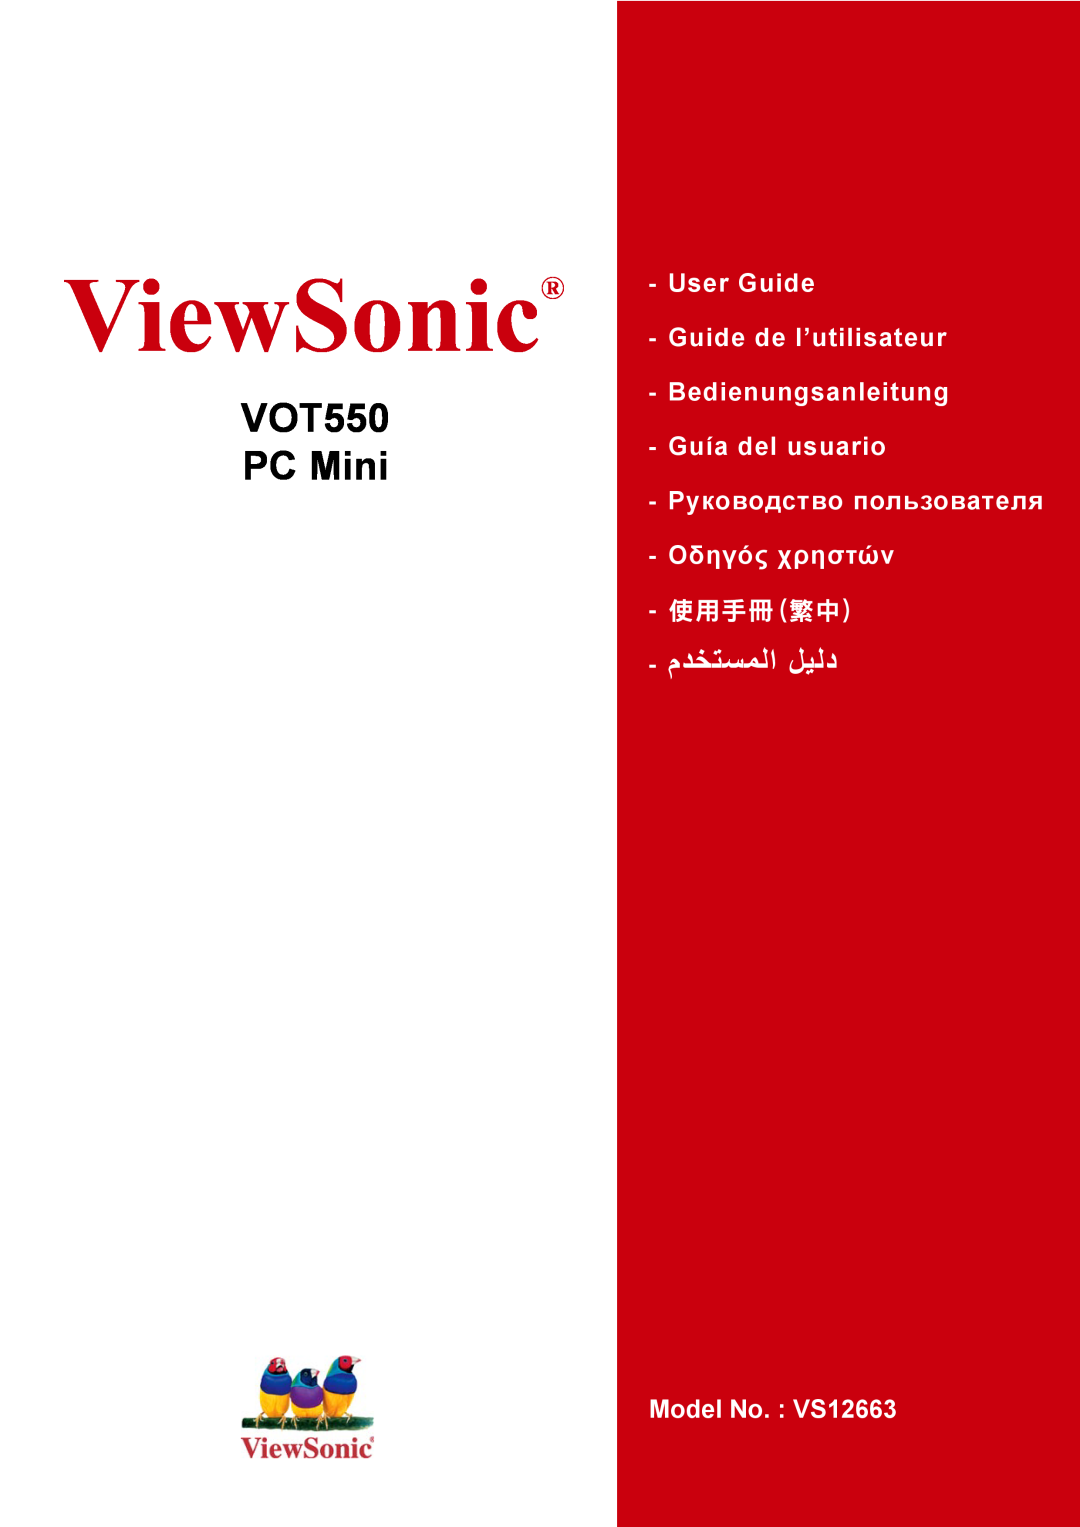 ViewSonic manual ViewSonic, VOT550 PC Mini, ﻢﺪﺨﺘﺴﻤﻠﺍ ﻞﻴﻠﺪ, User Guide Guide de l’utilisateur, 使用手冊繁中 